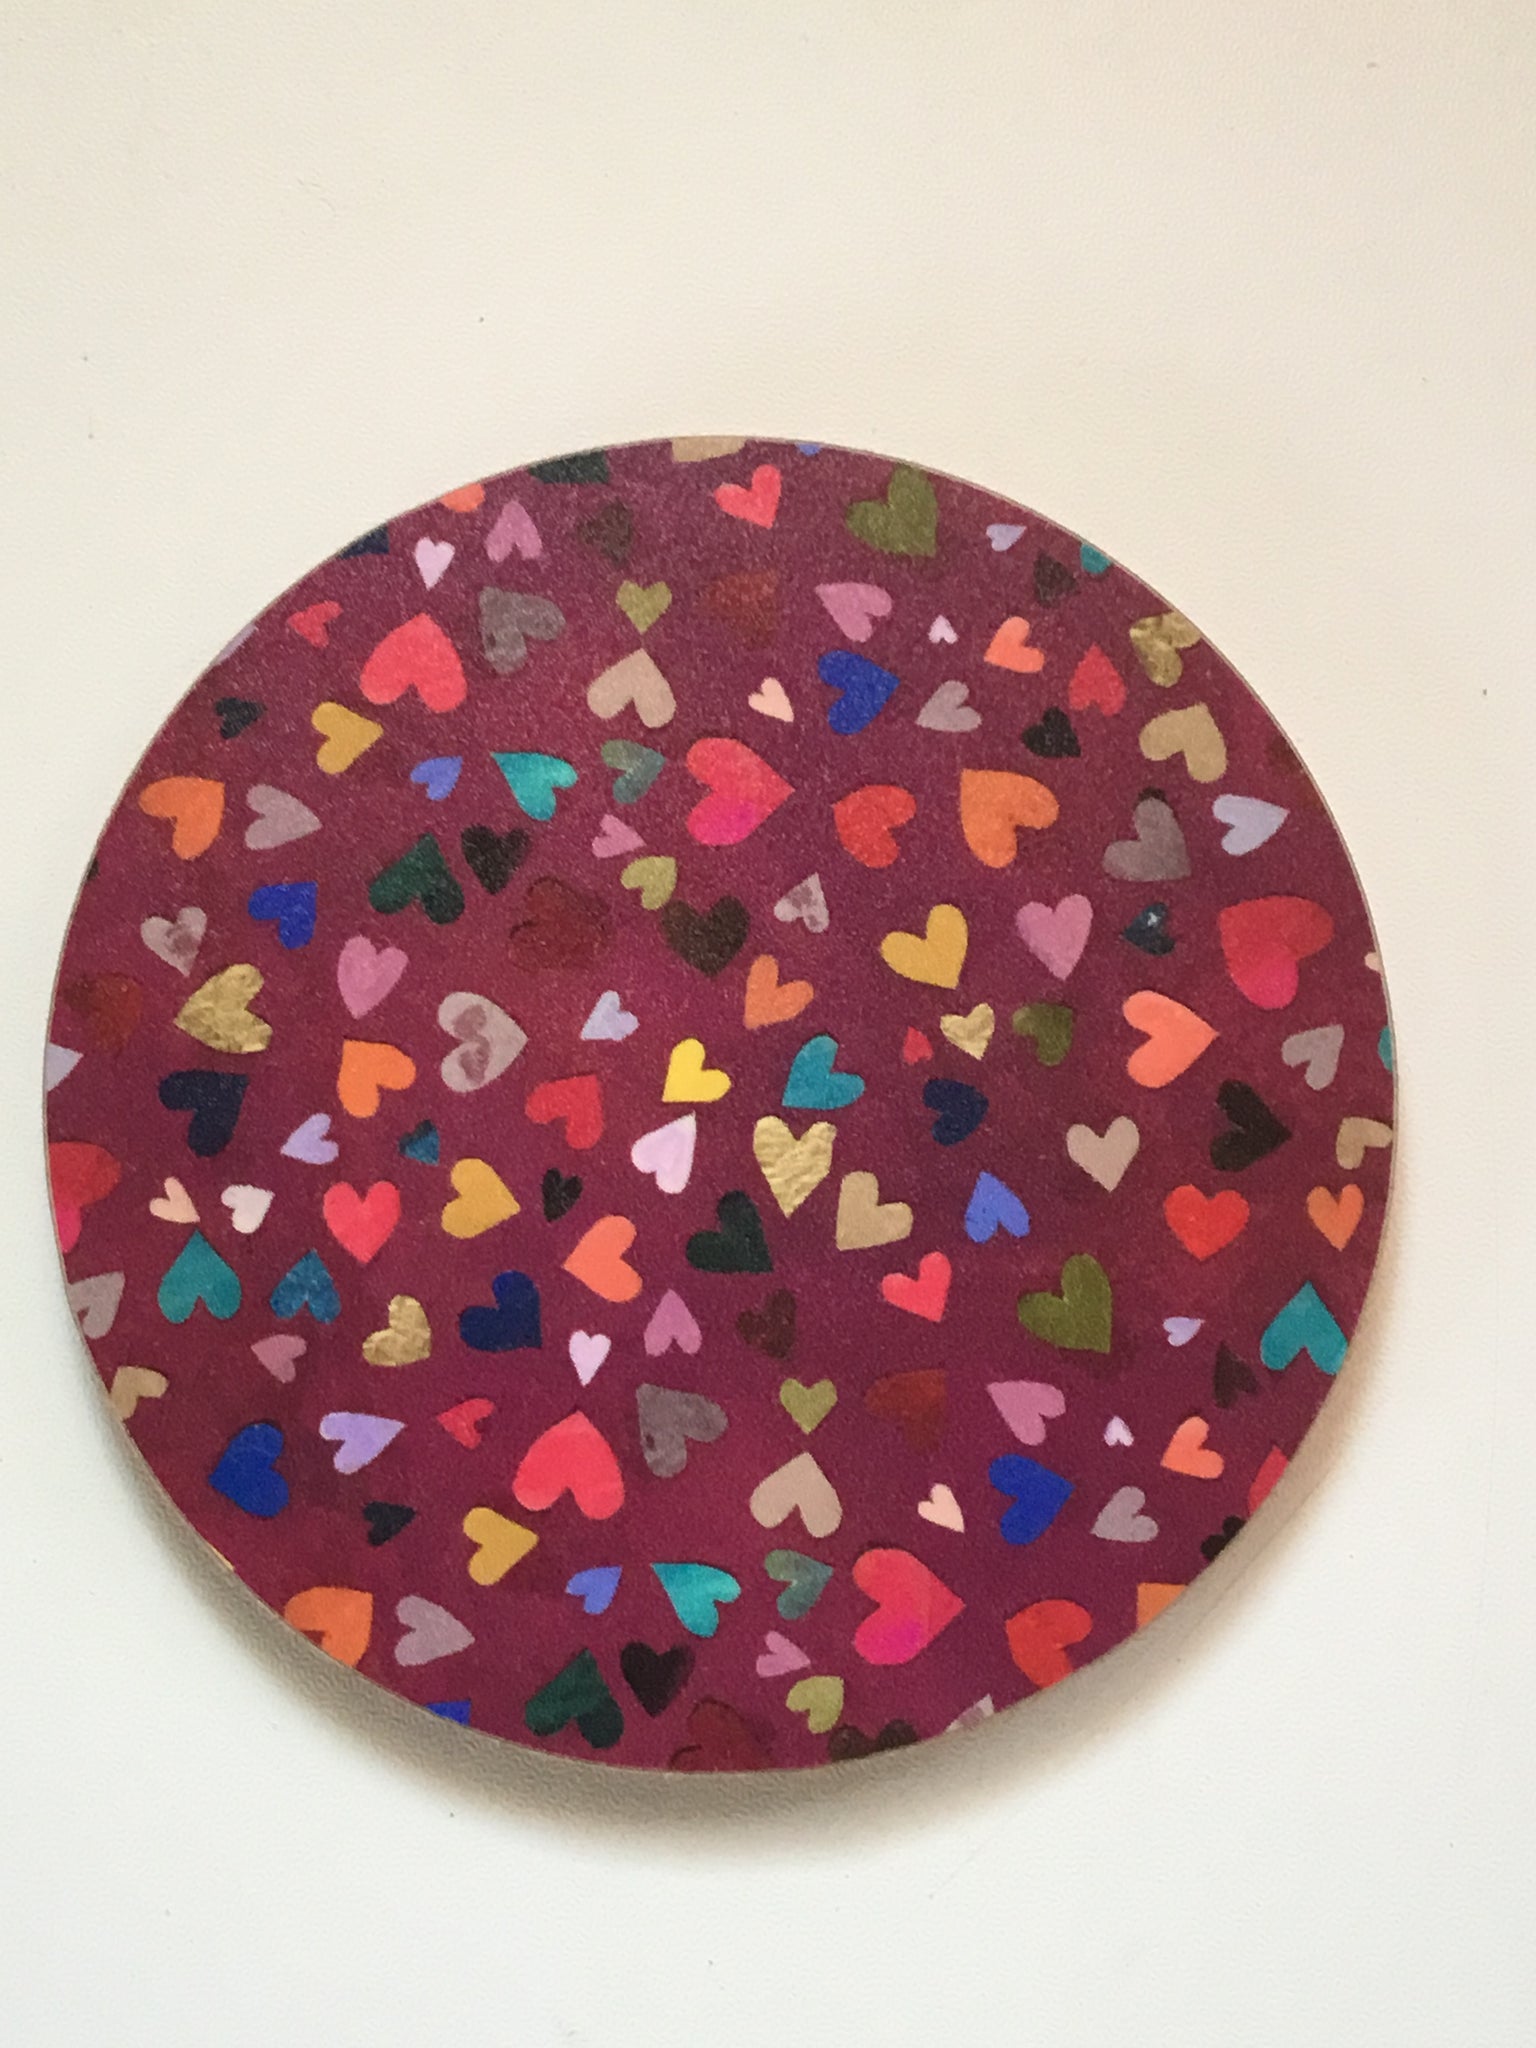 'Hearts' round coaster by Lizzie Spikes